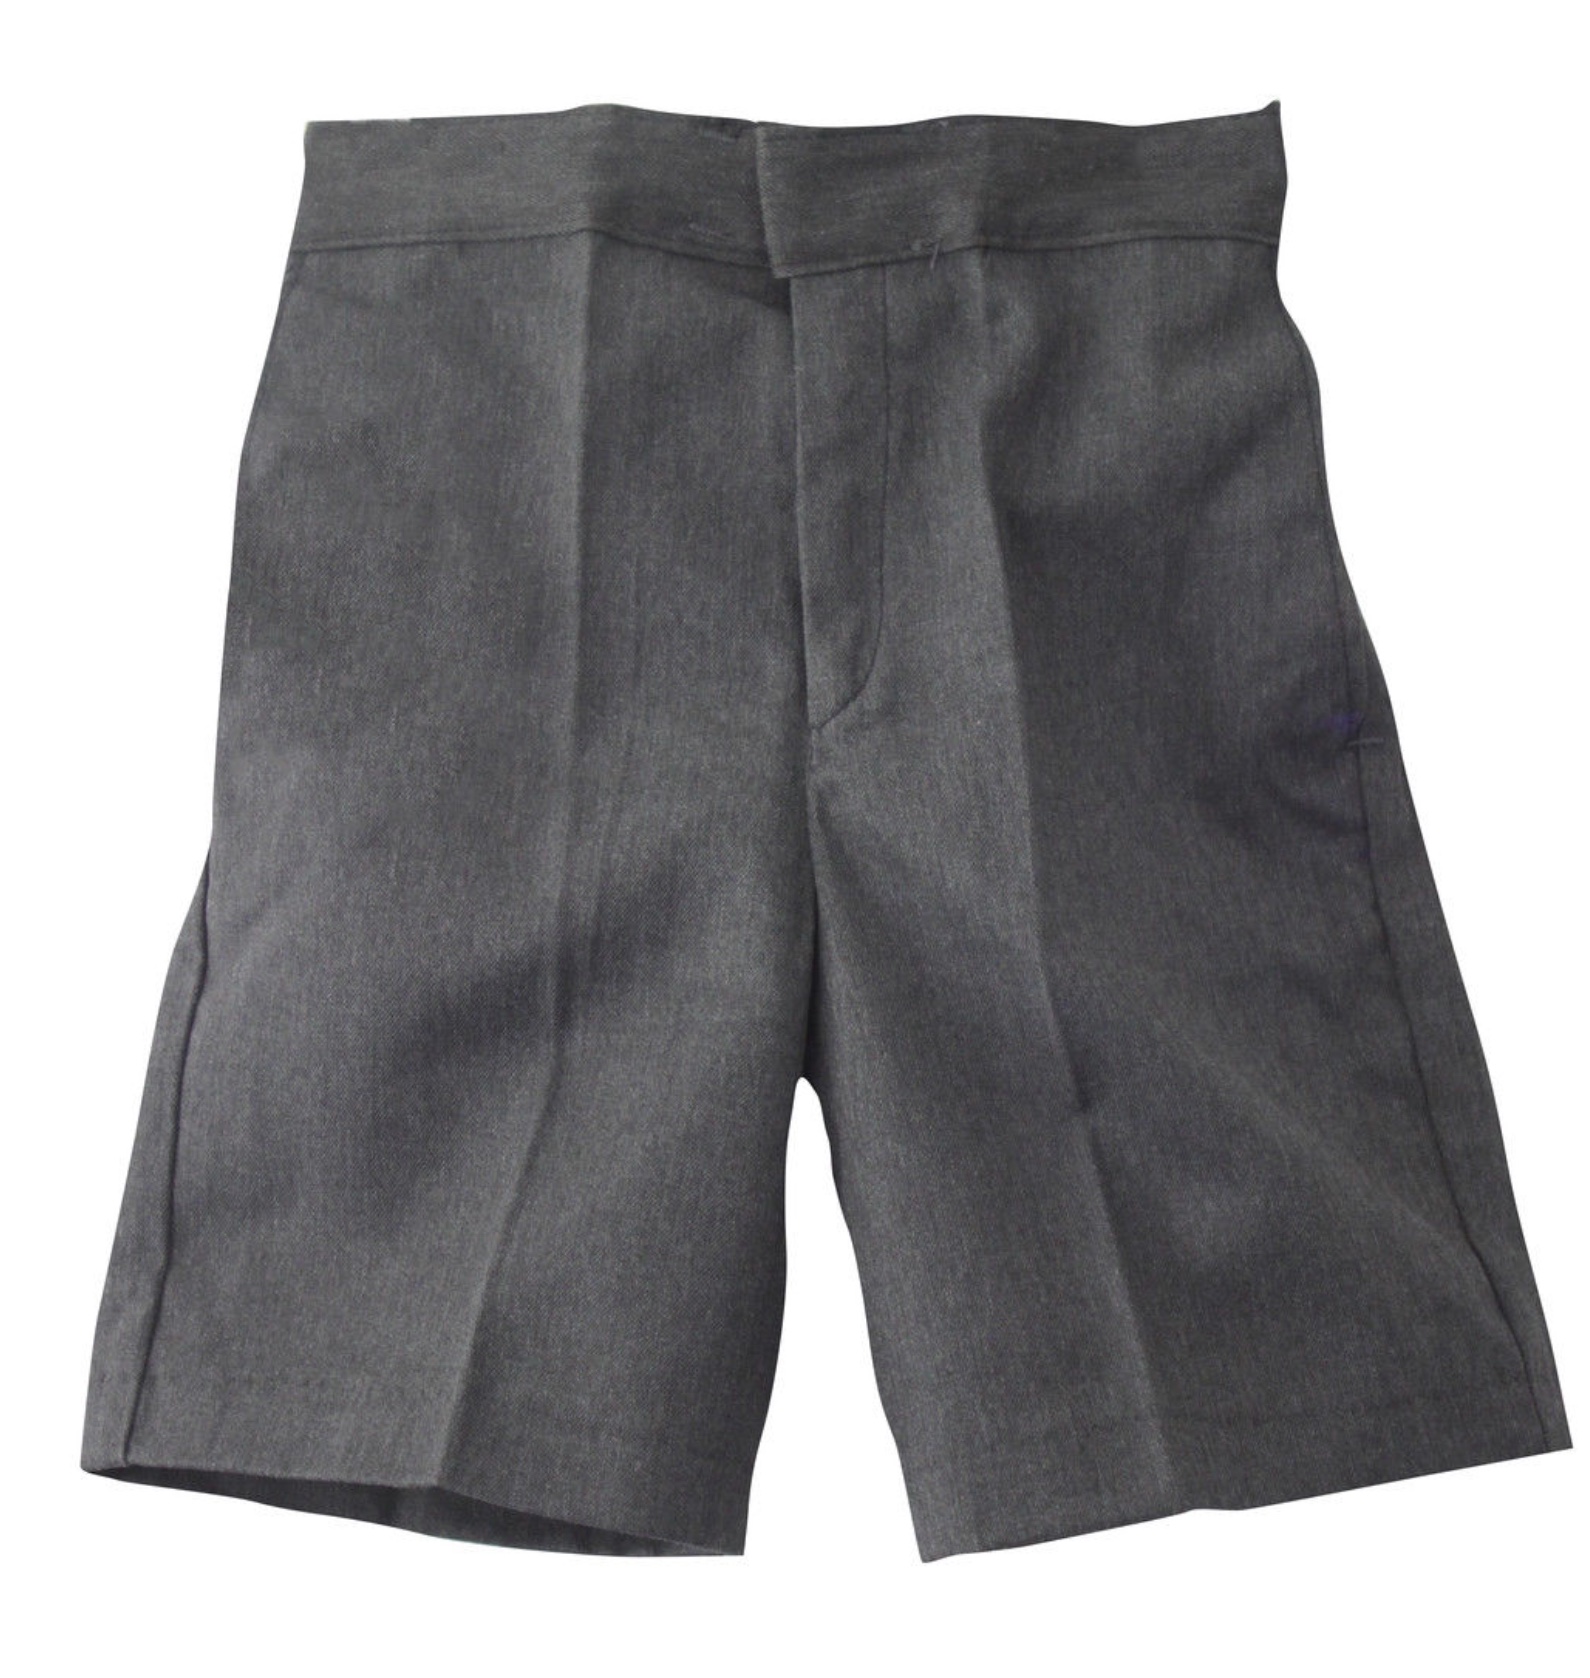 Boys' Dark Grey Shorts, Flat Front, Adjustable Waist, Zip Fly, Side and Back Pockets 8-9 Y